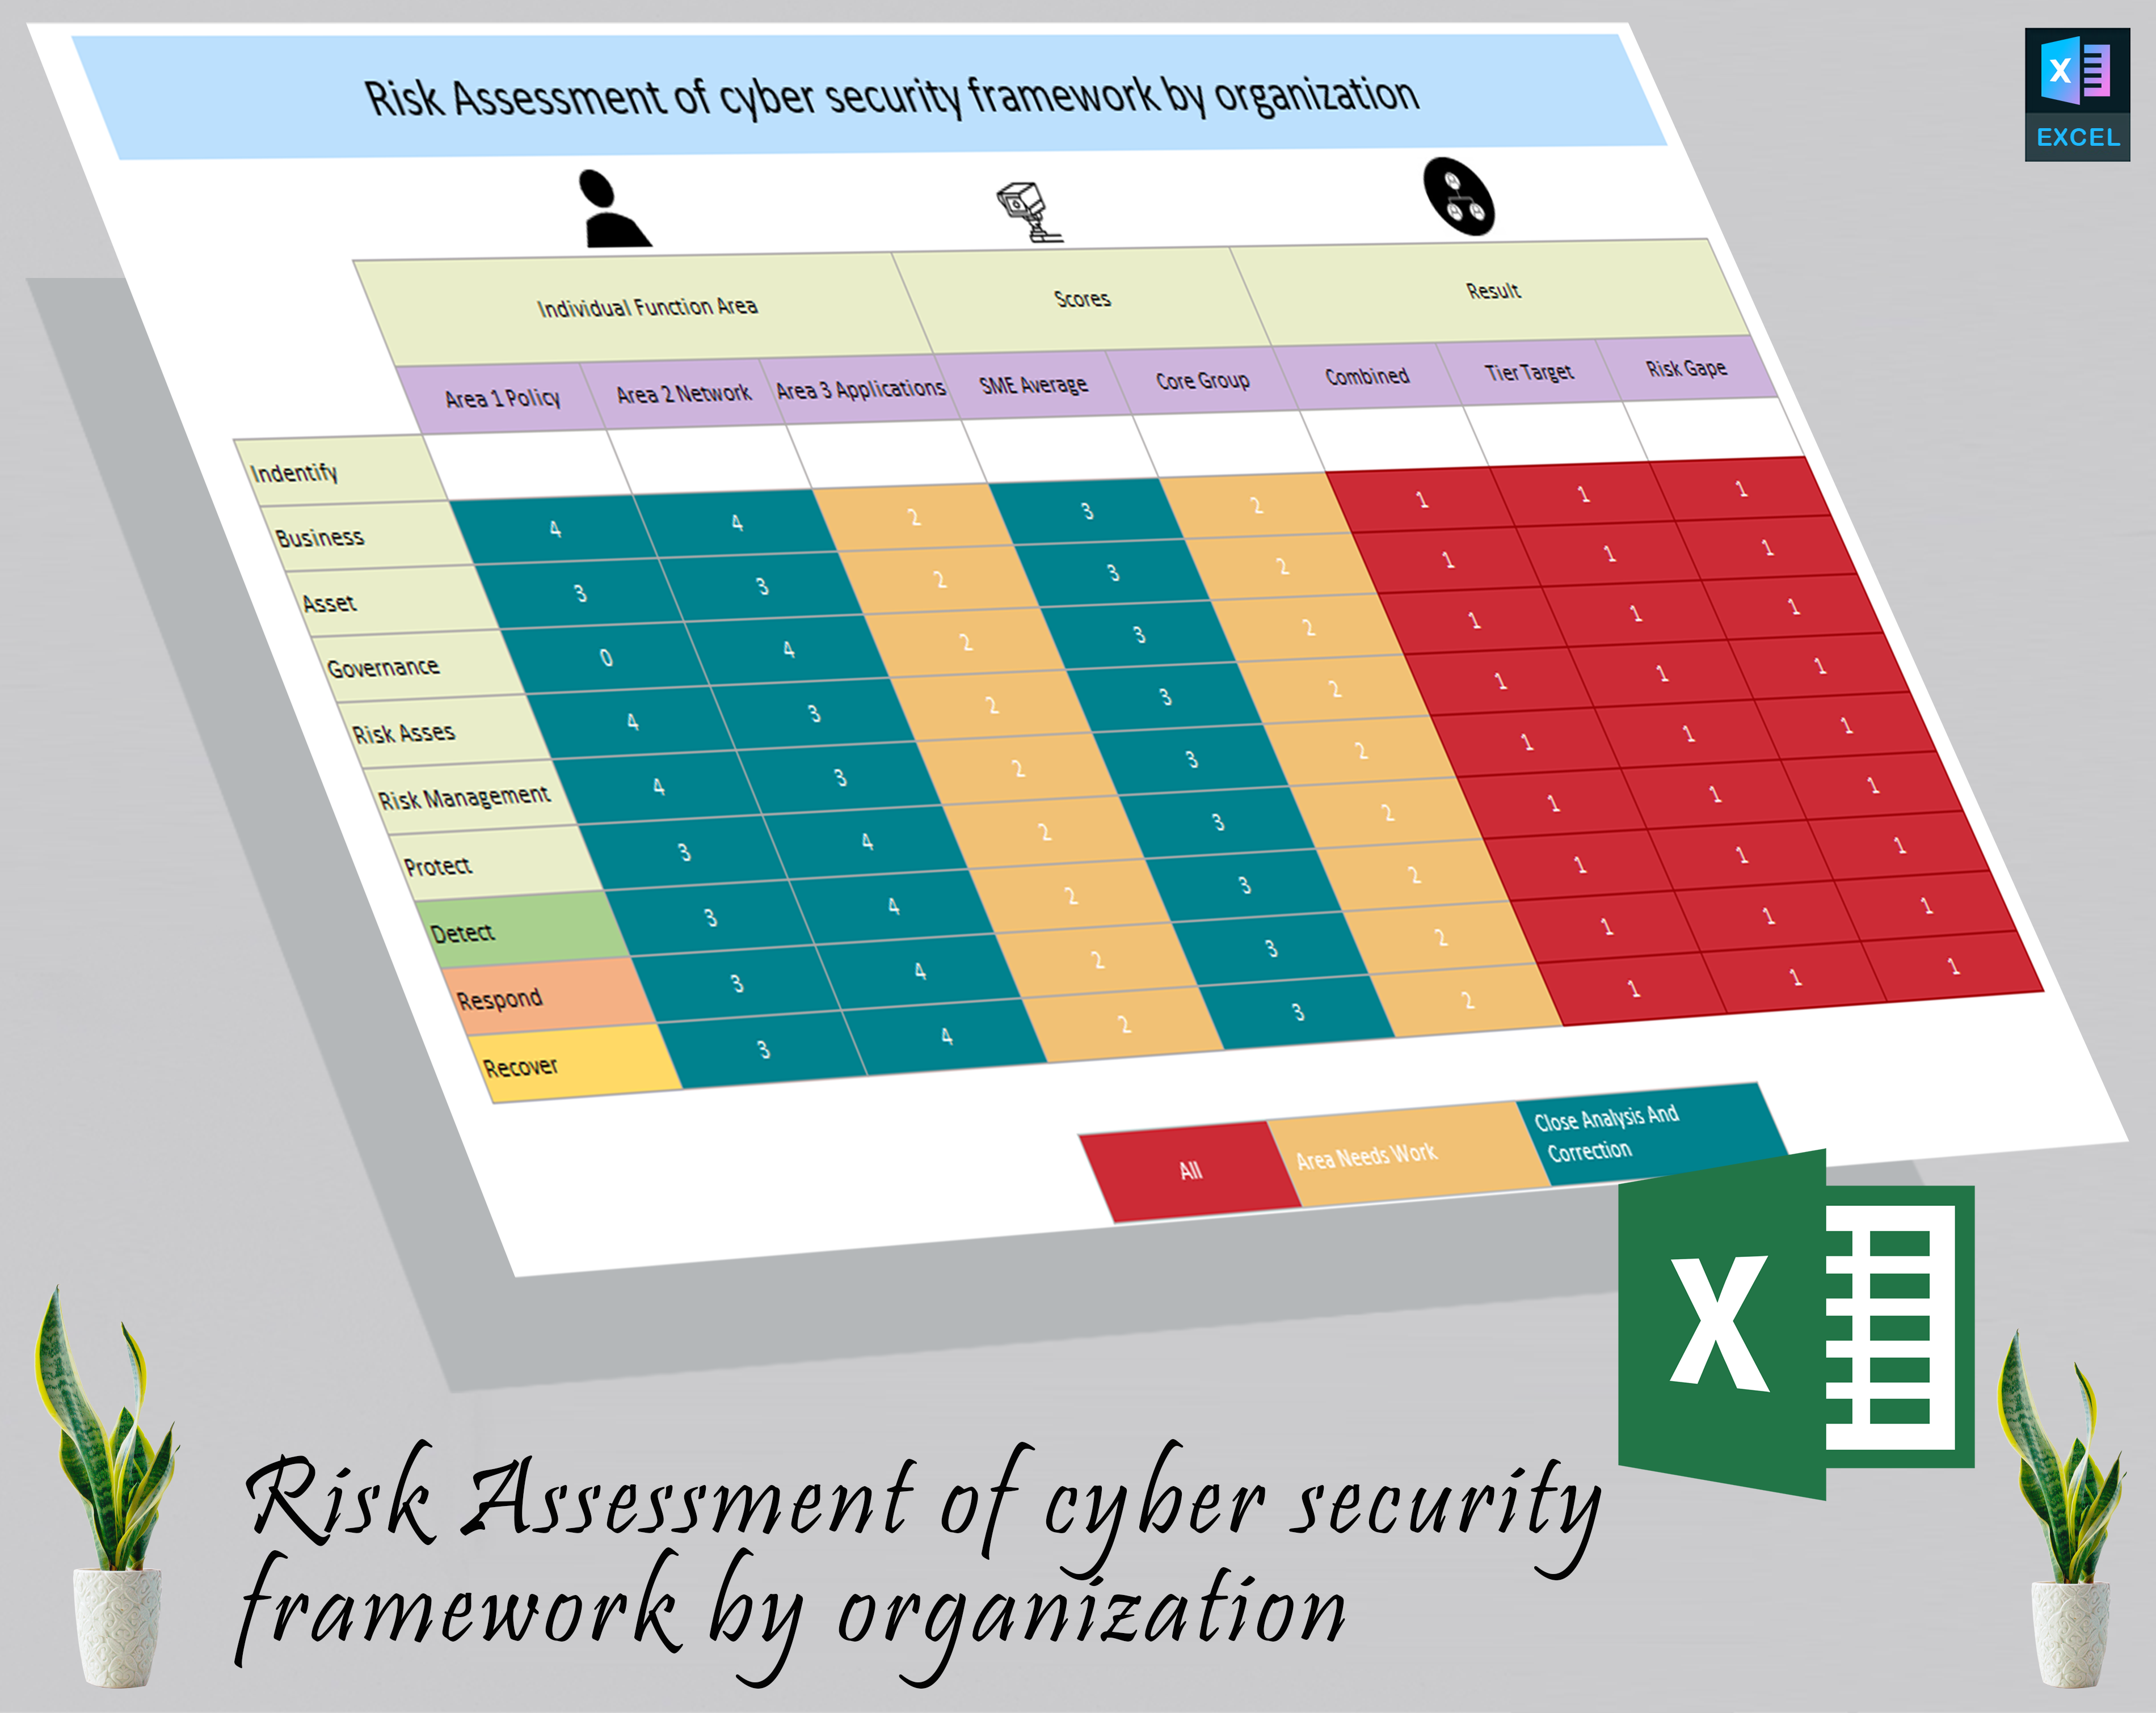 Risk Assessment of cyber security framework